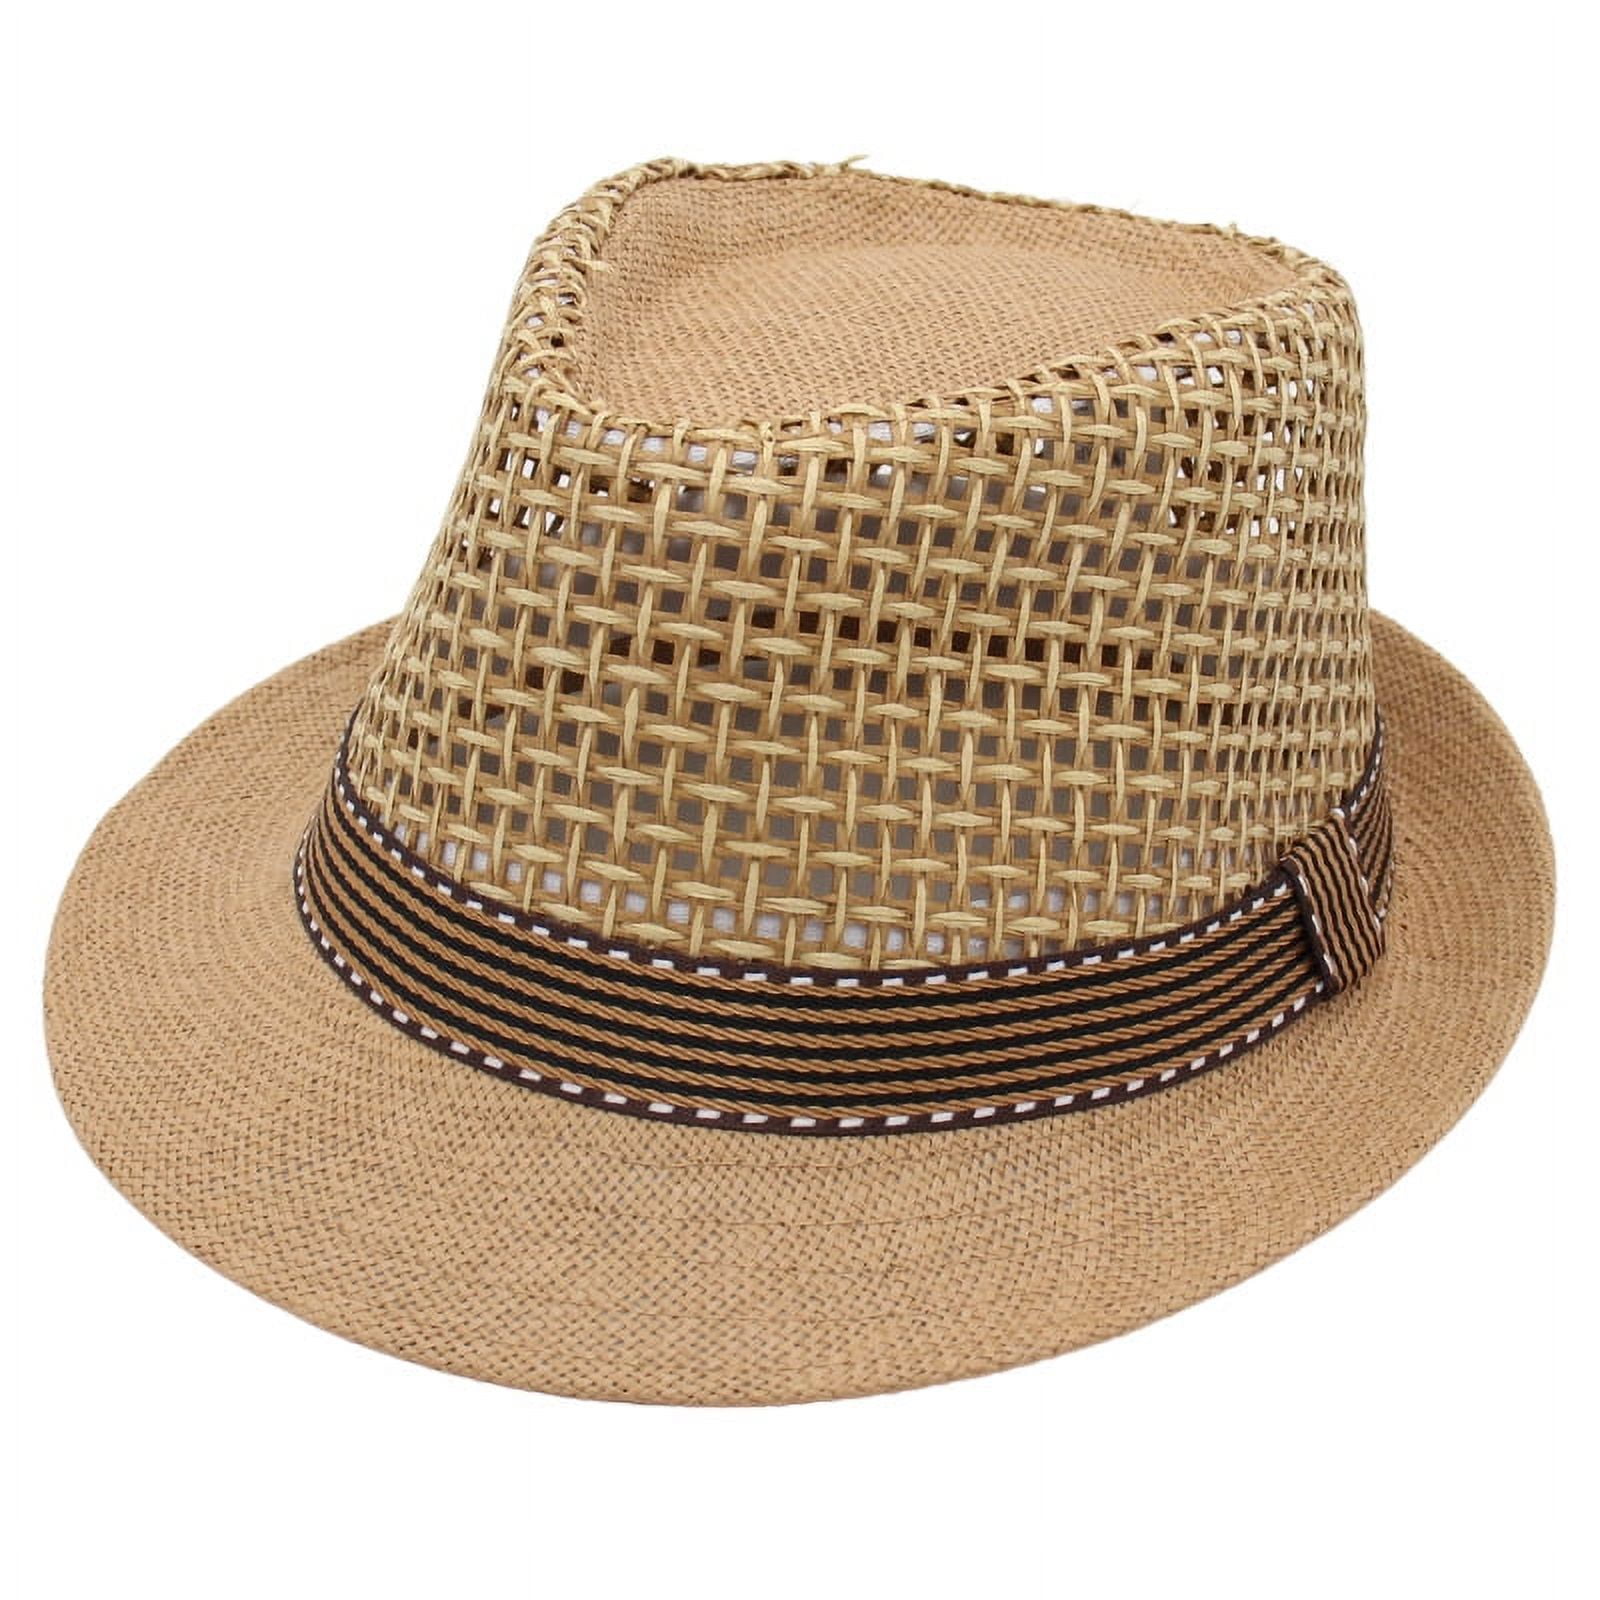 Straw Hat Short-brimmed Beach Hat Breathable Woven Bucket Hat For Men Women